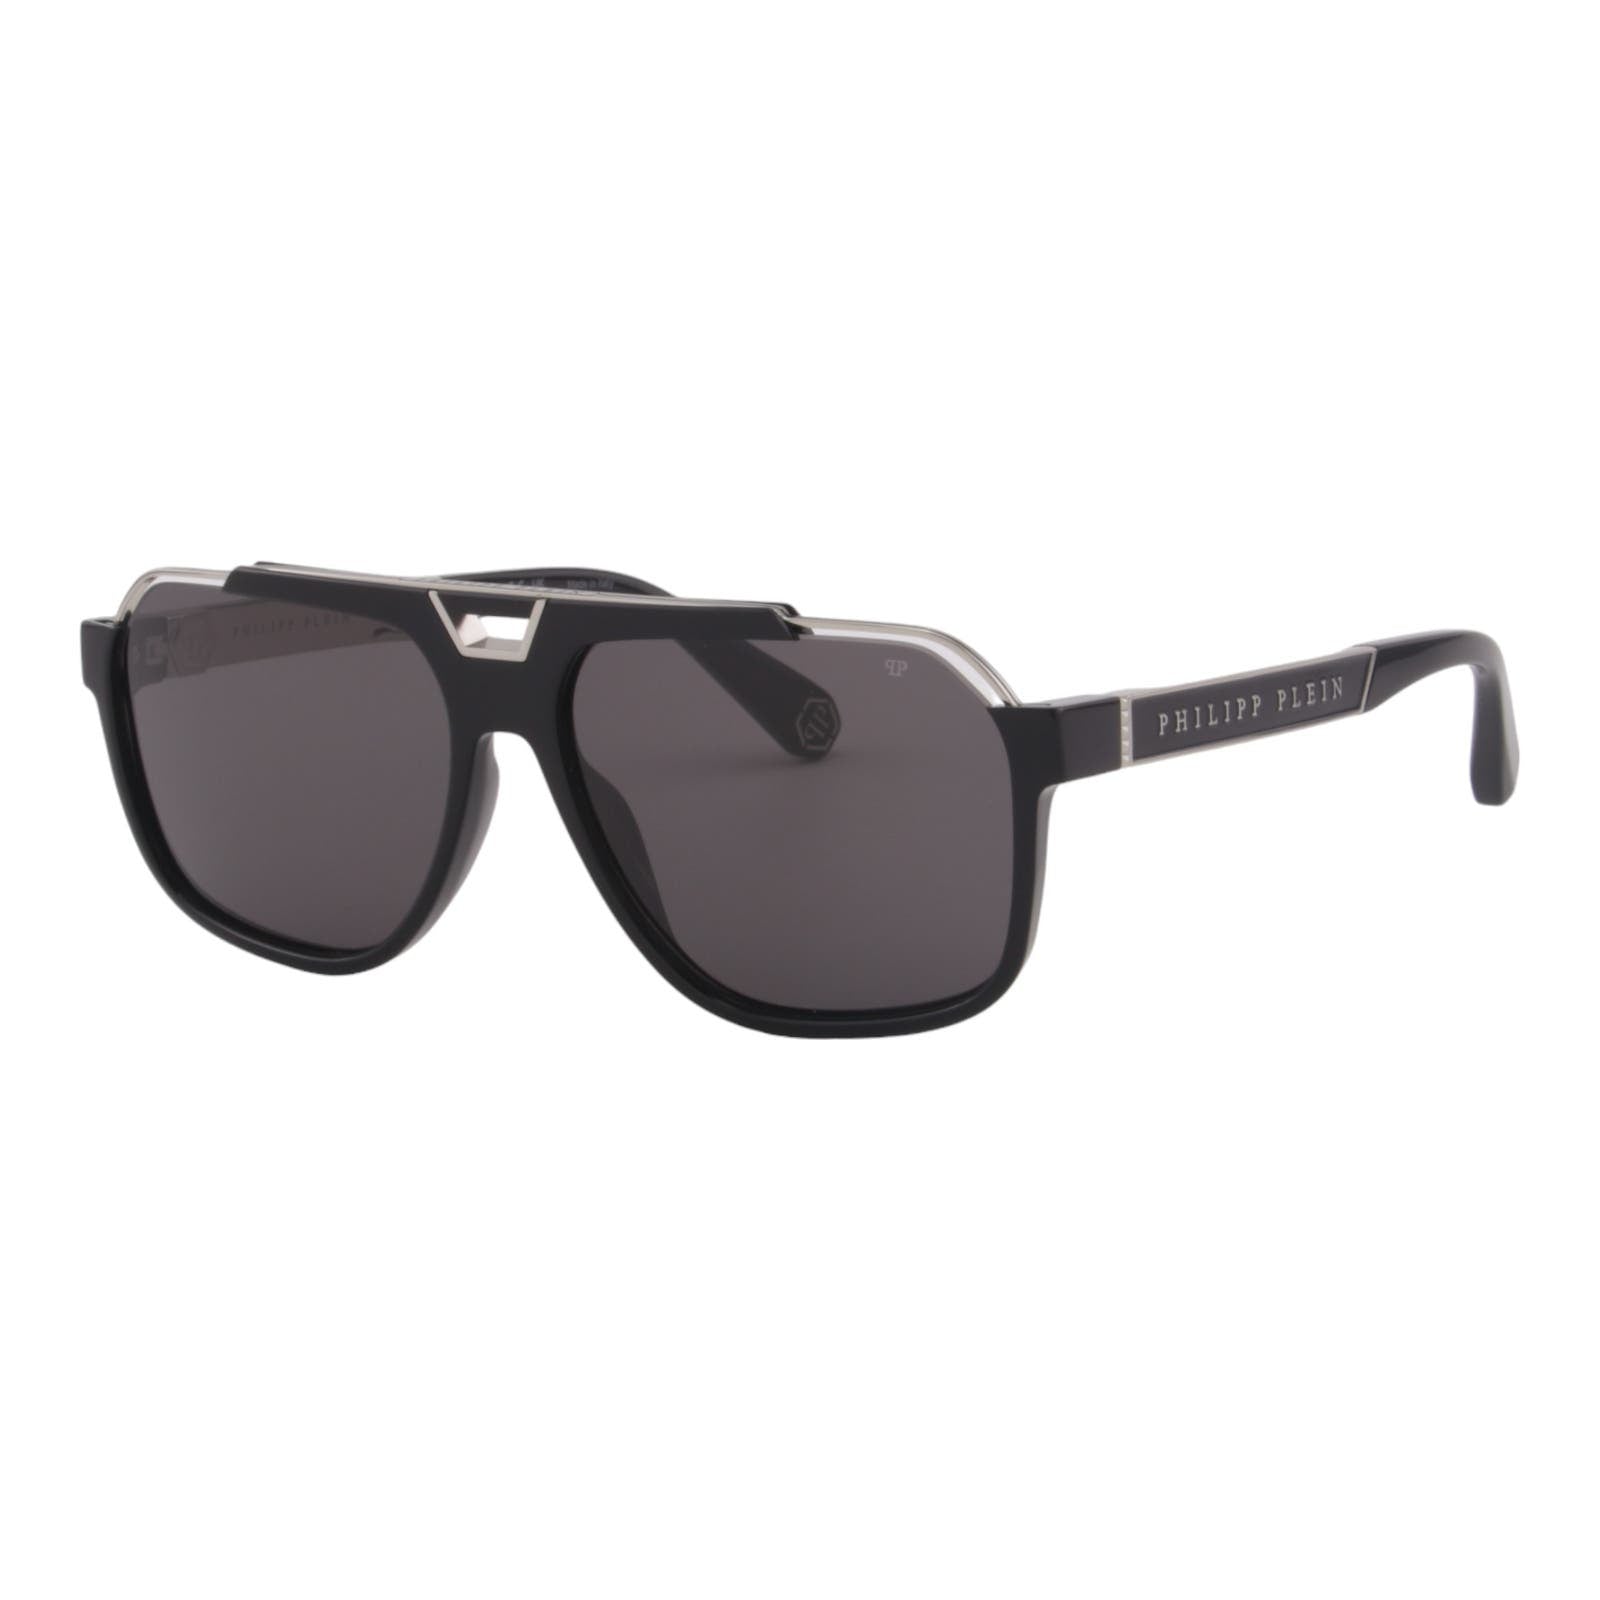 Men Square Sunglasses SPP046M-0700 Black & Silver Frame